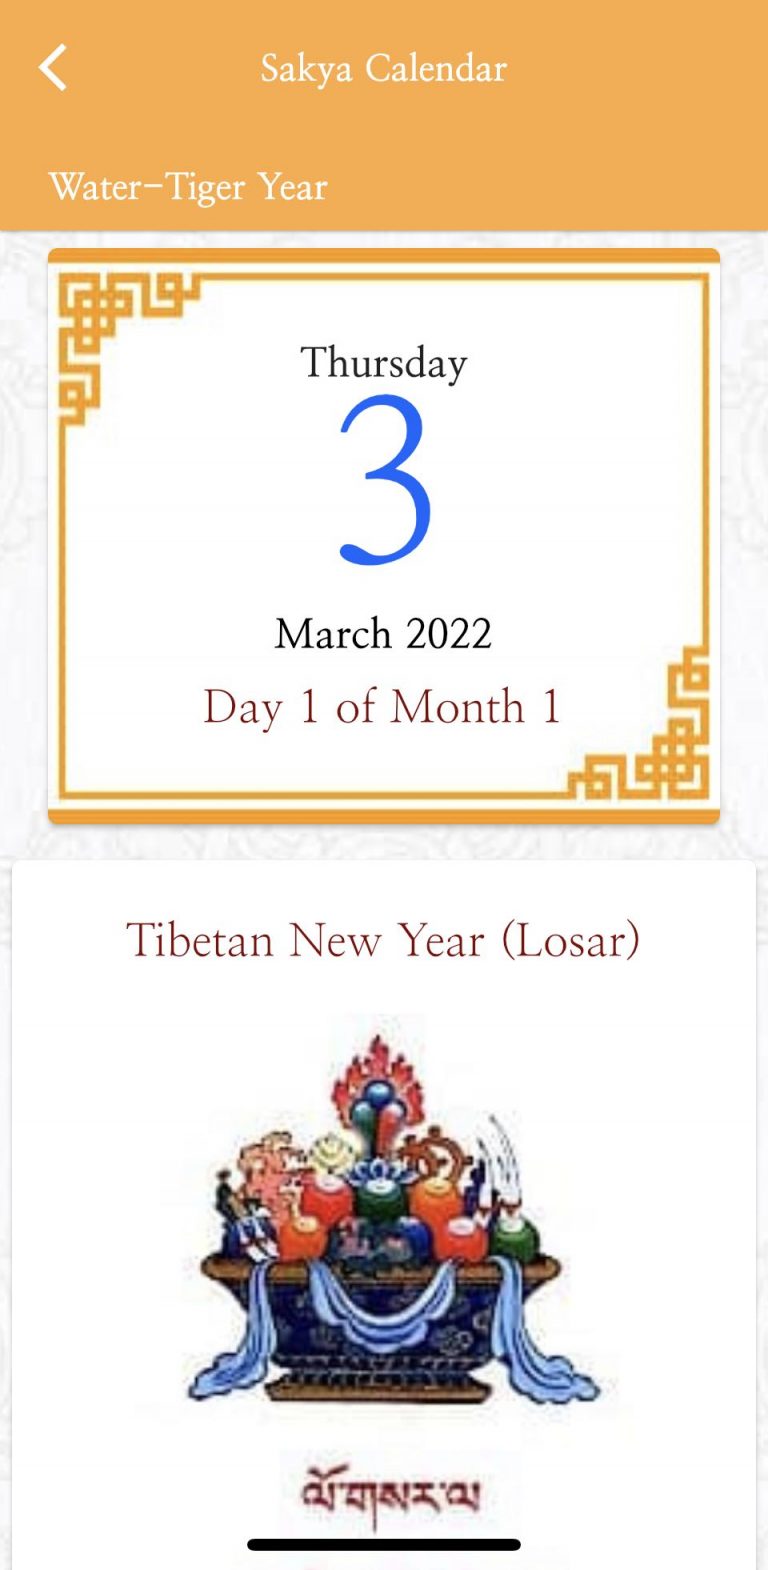 Sakya Calendar App Screenshots